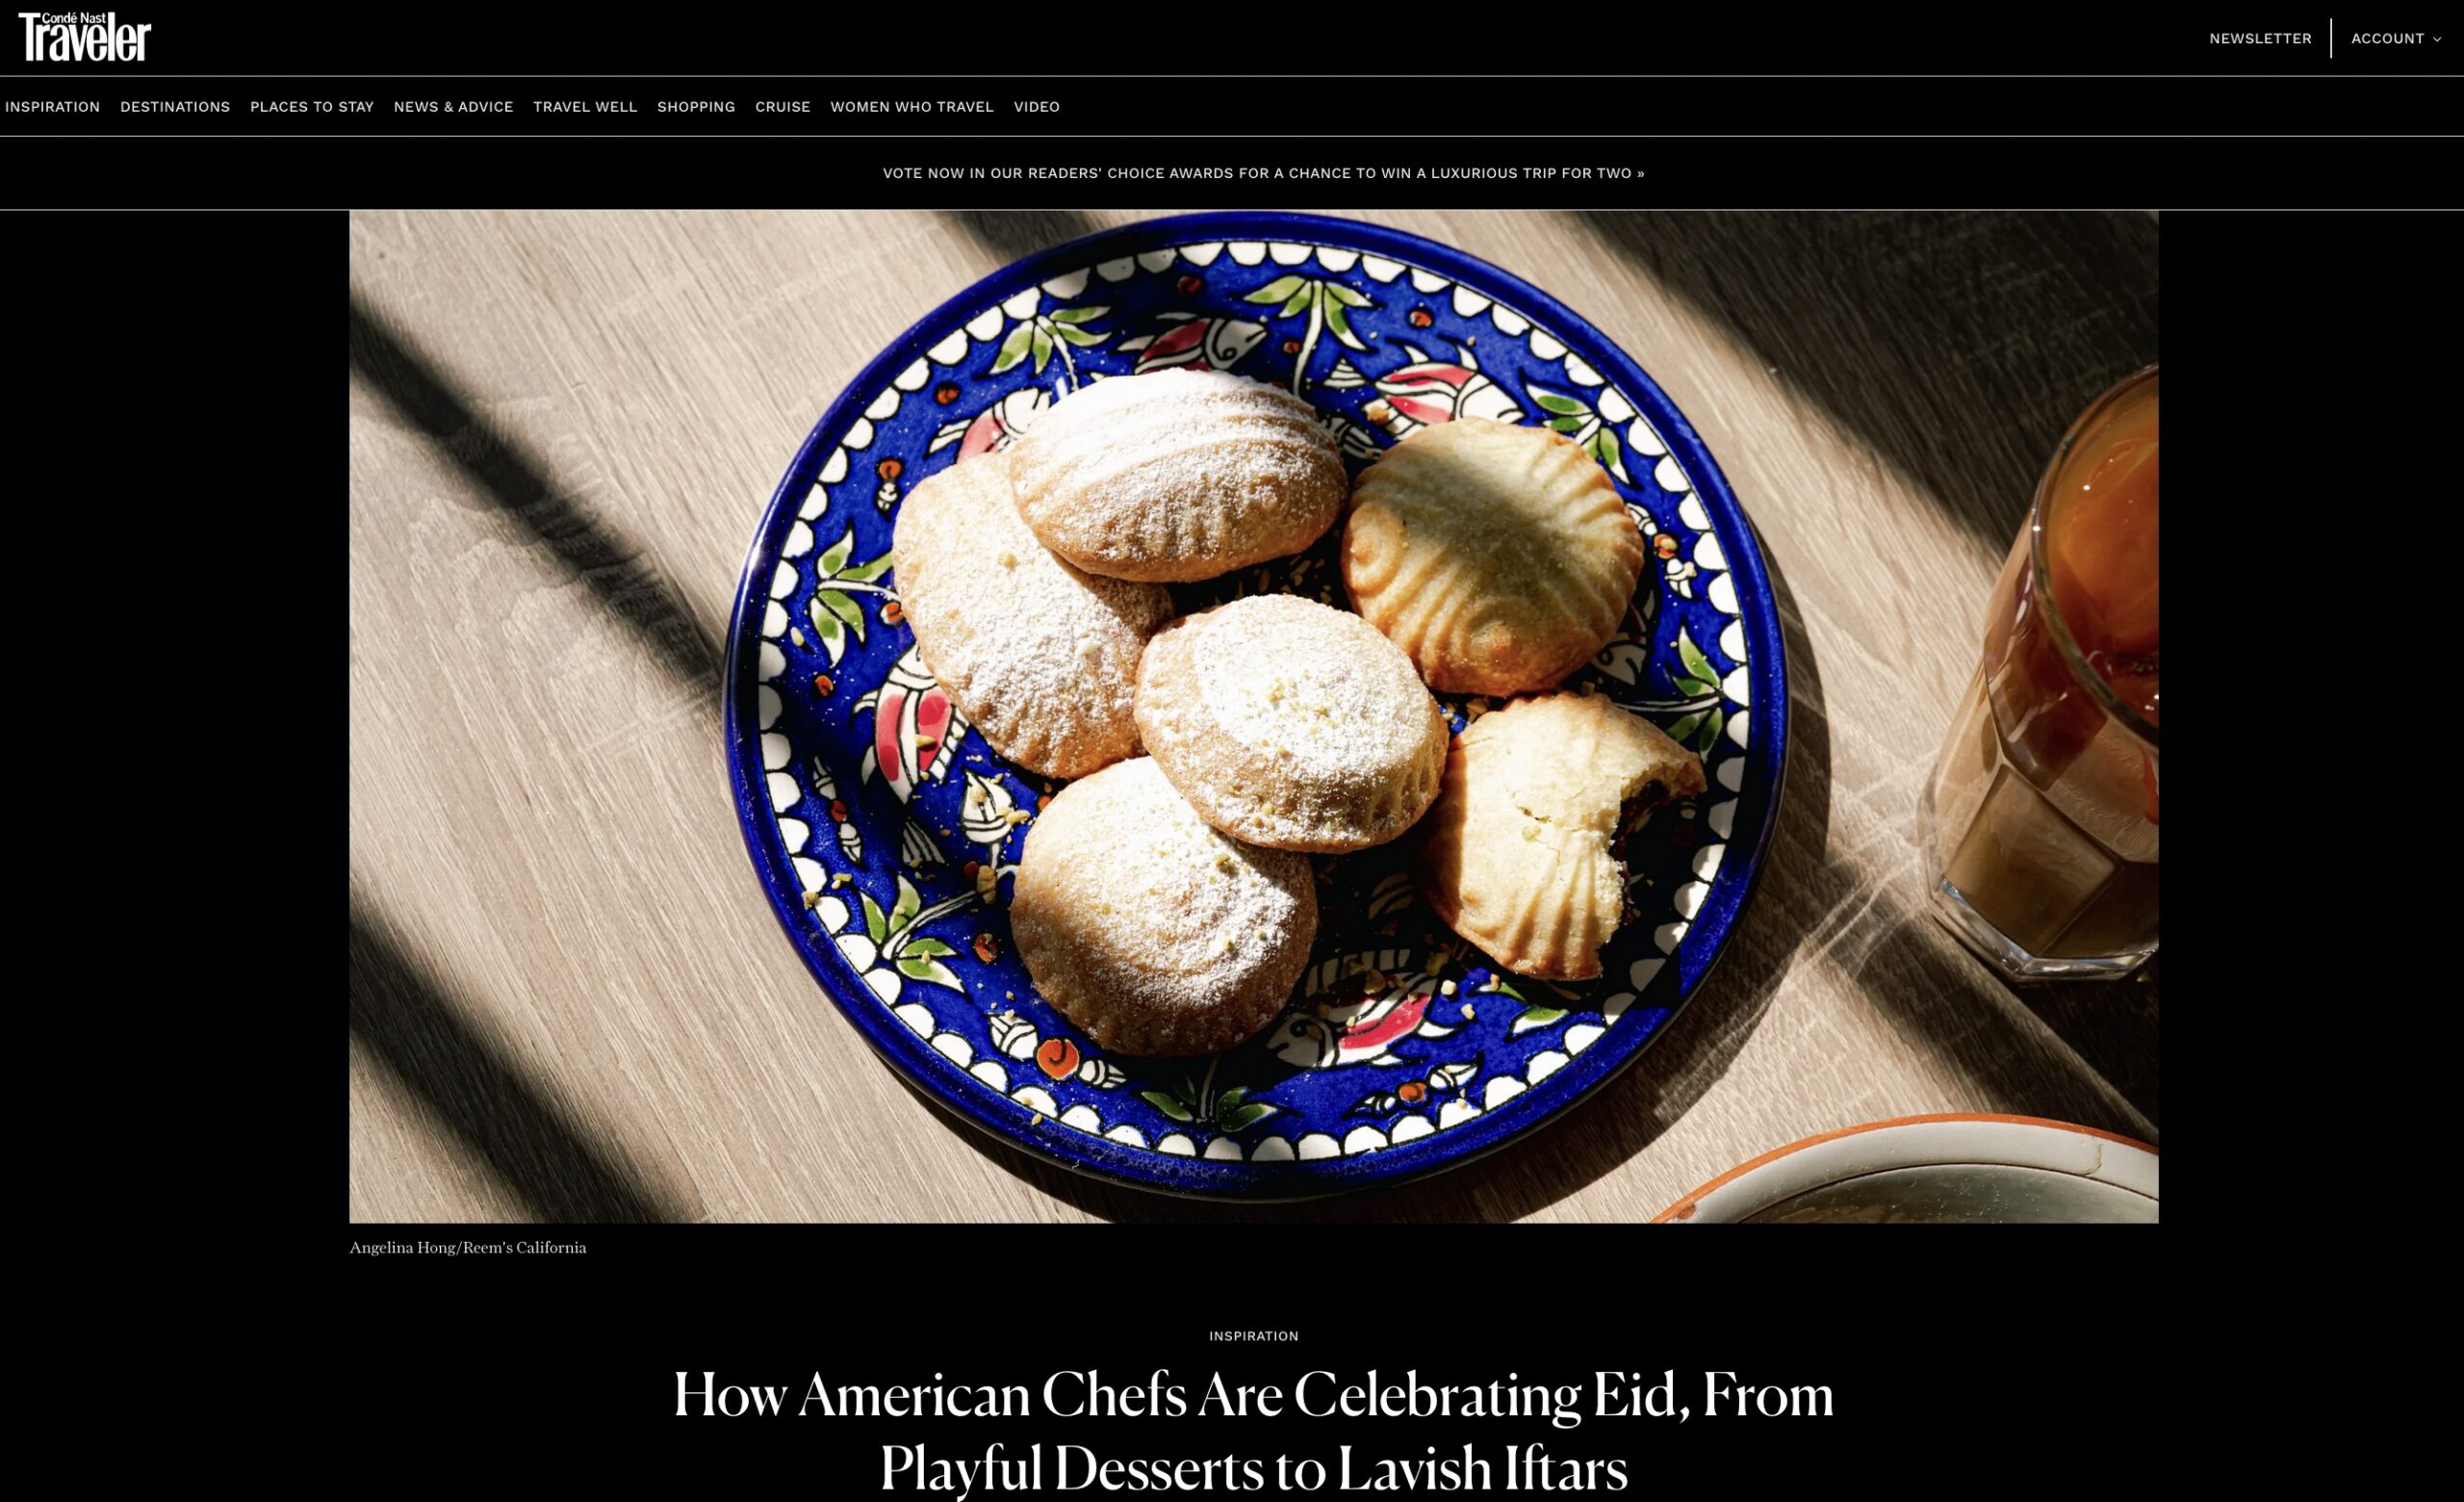 Condé Nast Traveler: How American Chefs Are Celebrating Eid